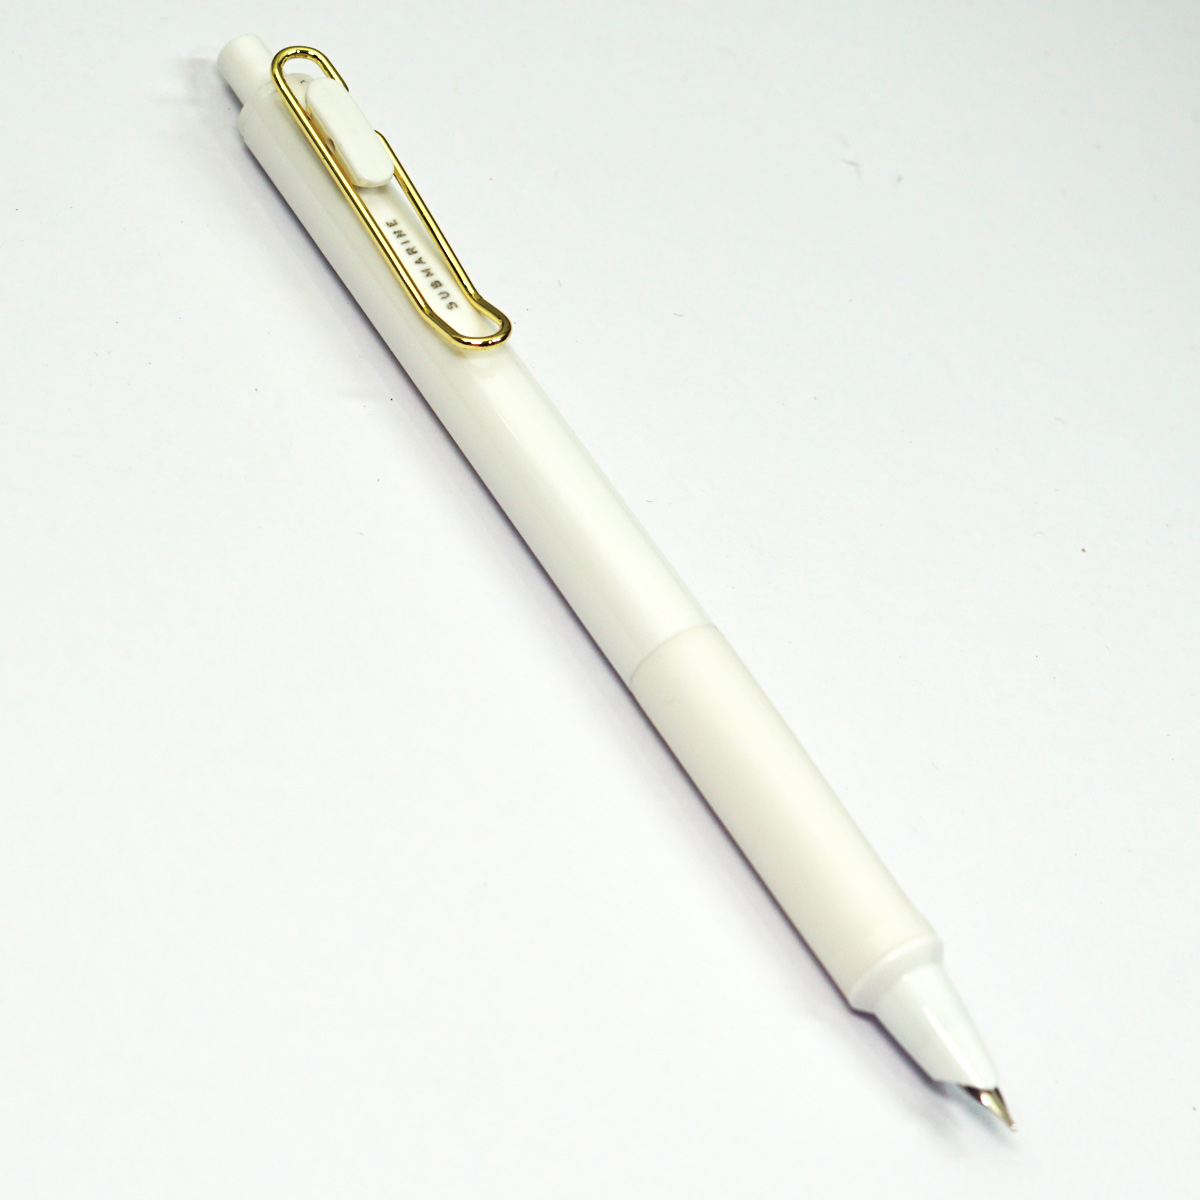 Submarine 923 White Color Body With Fine Nib Gold Designed Clip Converter Type Rubber Grip Click Type Fountain Pen SKU 23284